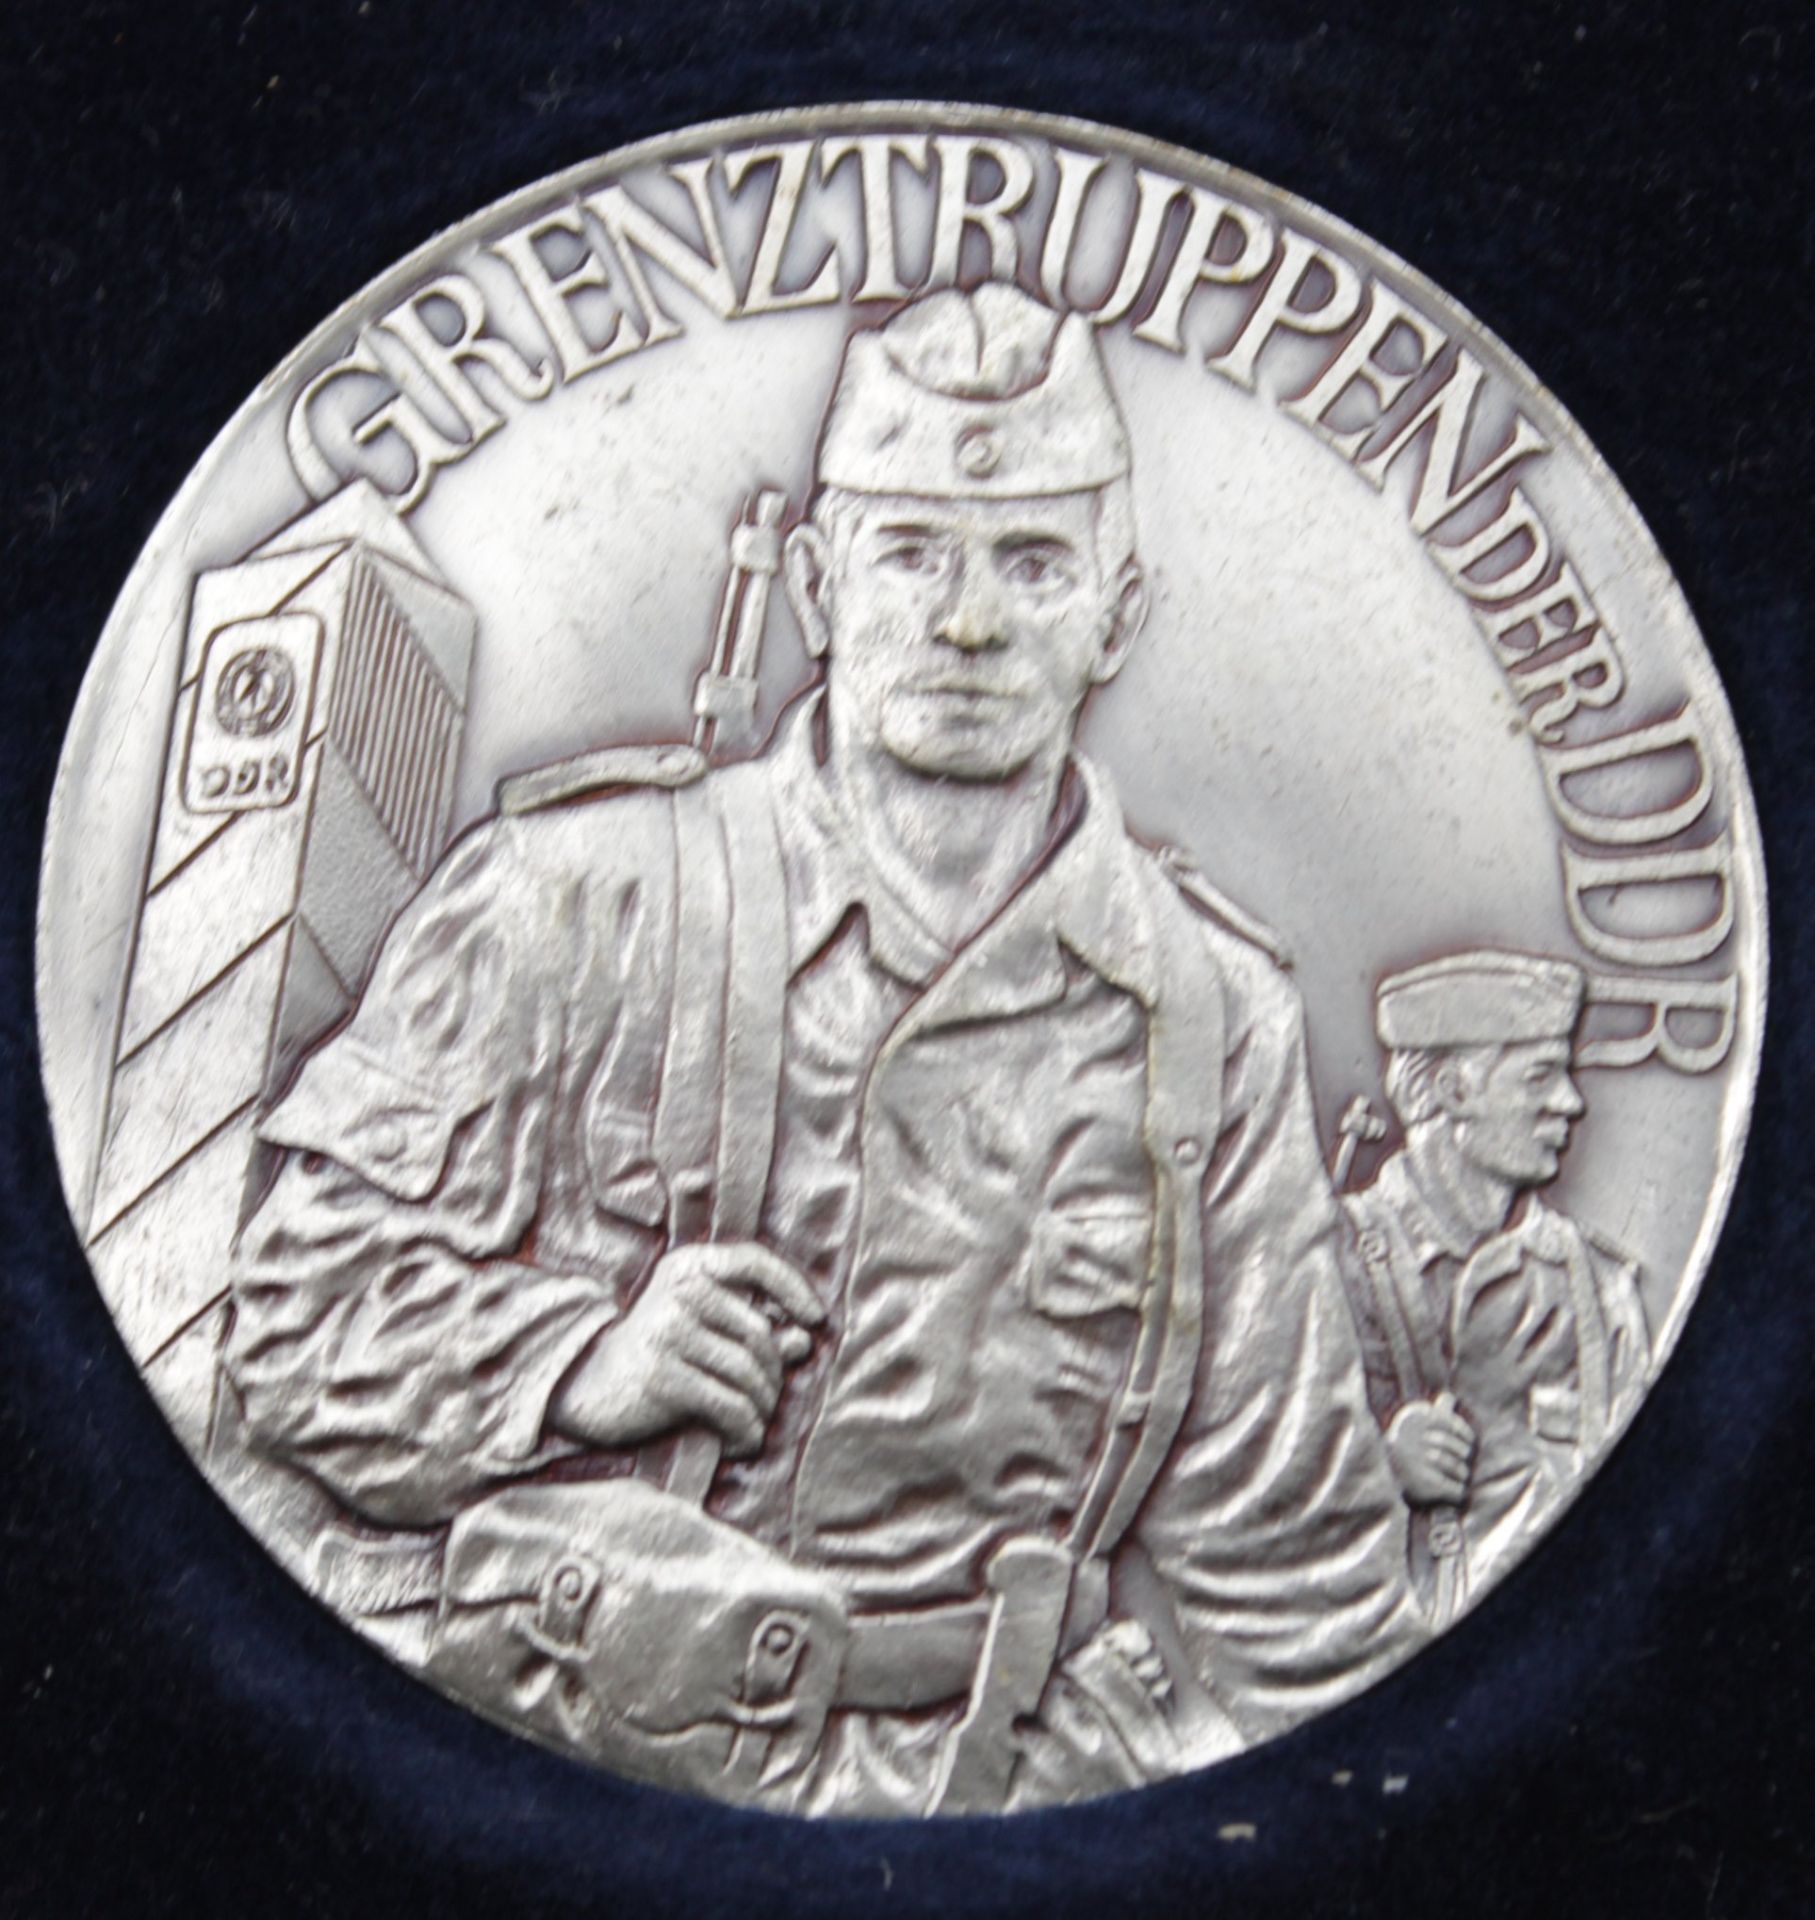 Medaille, Grenztruppen der DDR, versilbert, orig. Etui, D-6cm. - Image 2 of 3